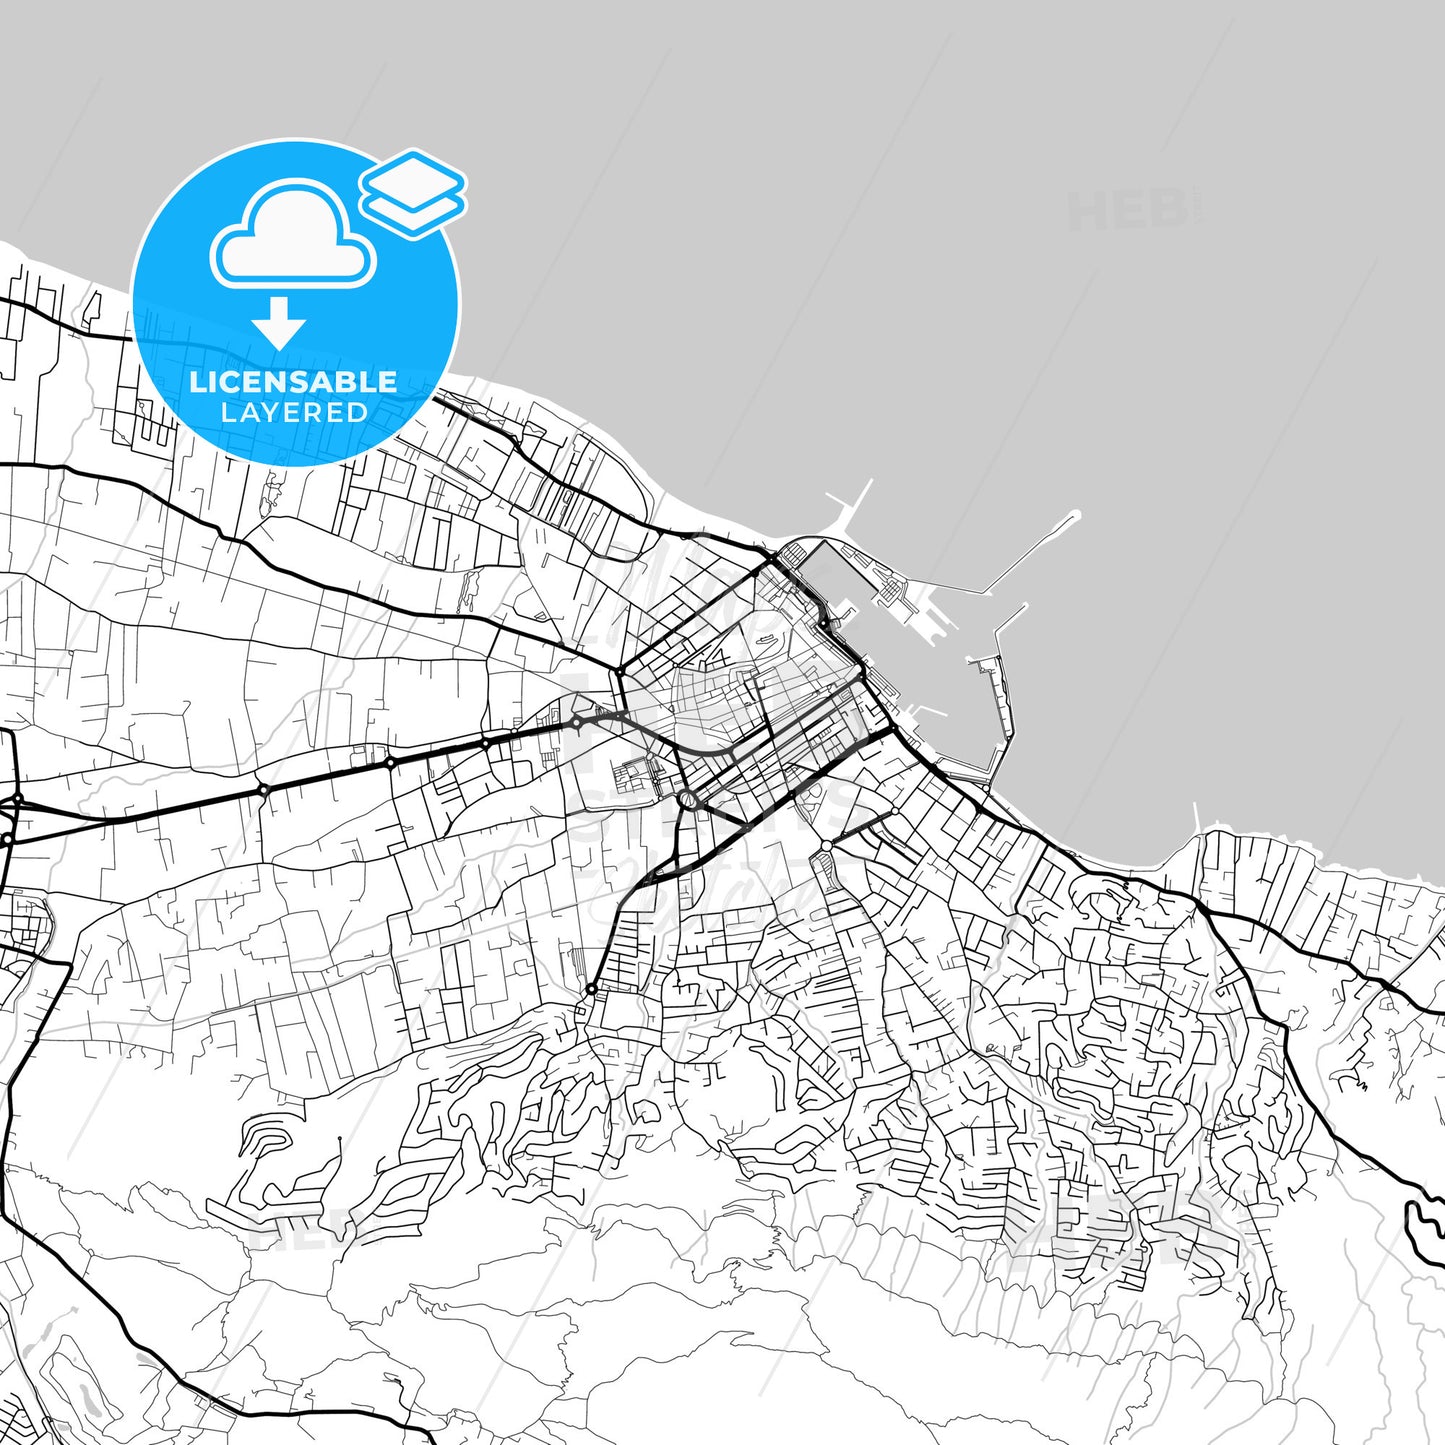 Layered PDF map of Denia, Alicante, Spain